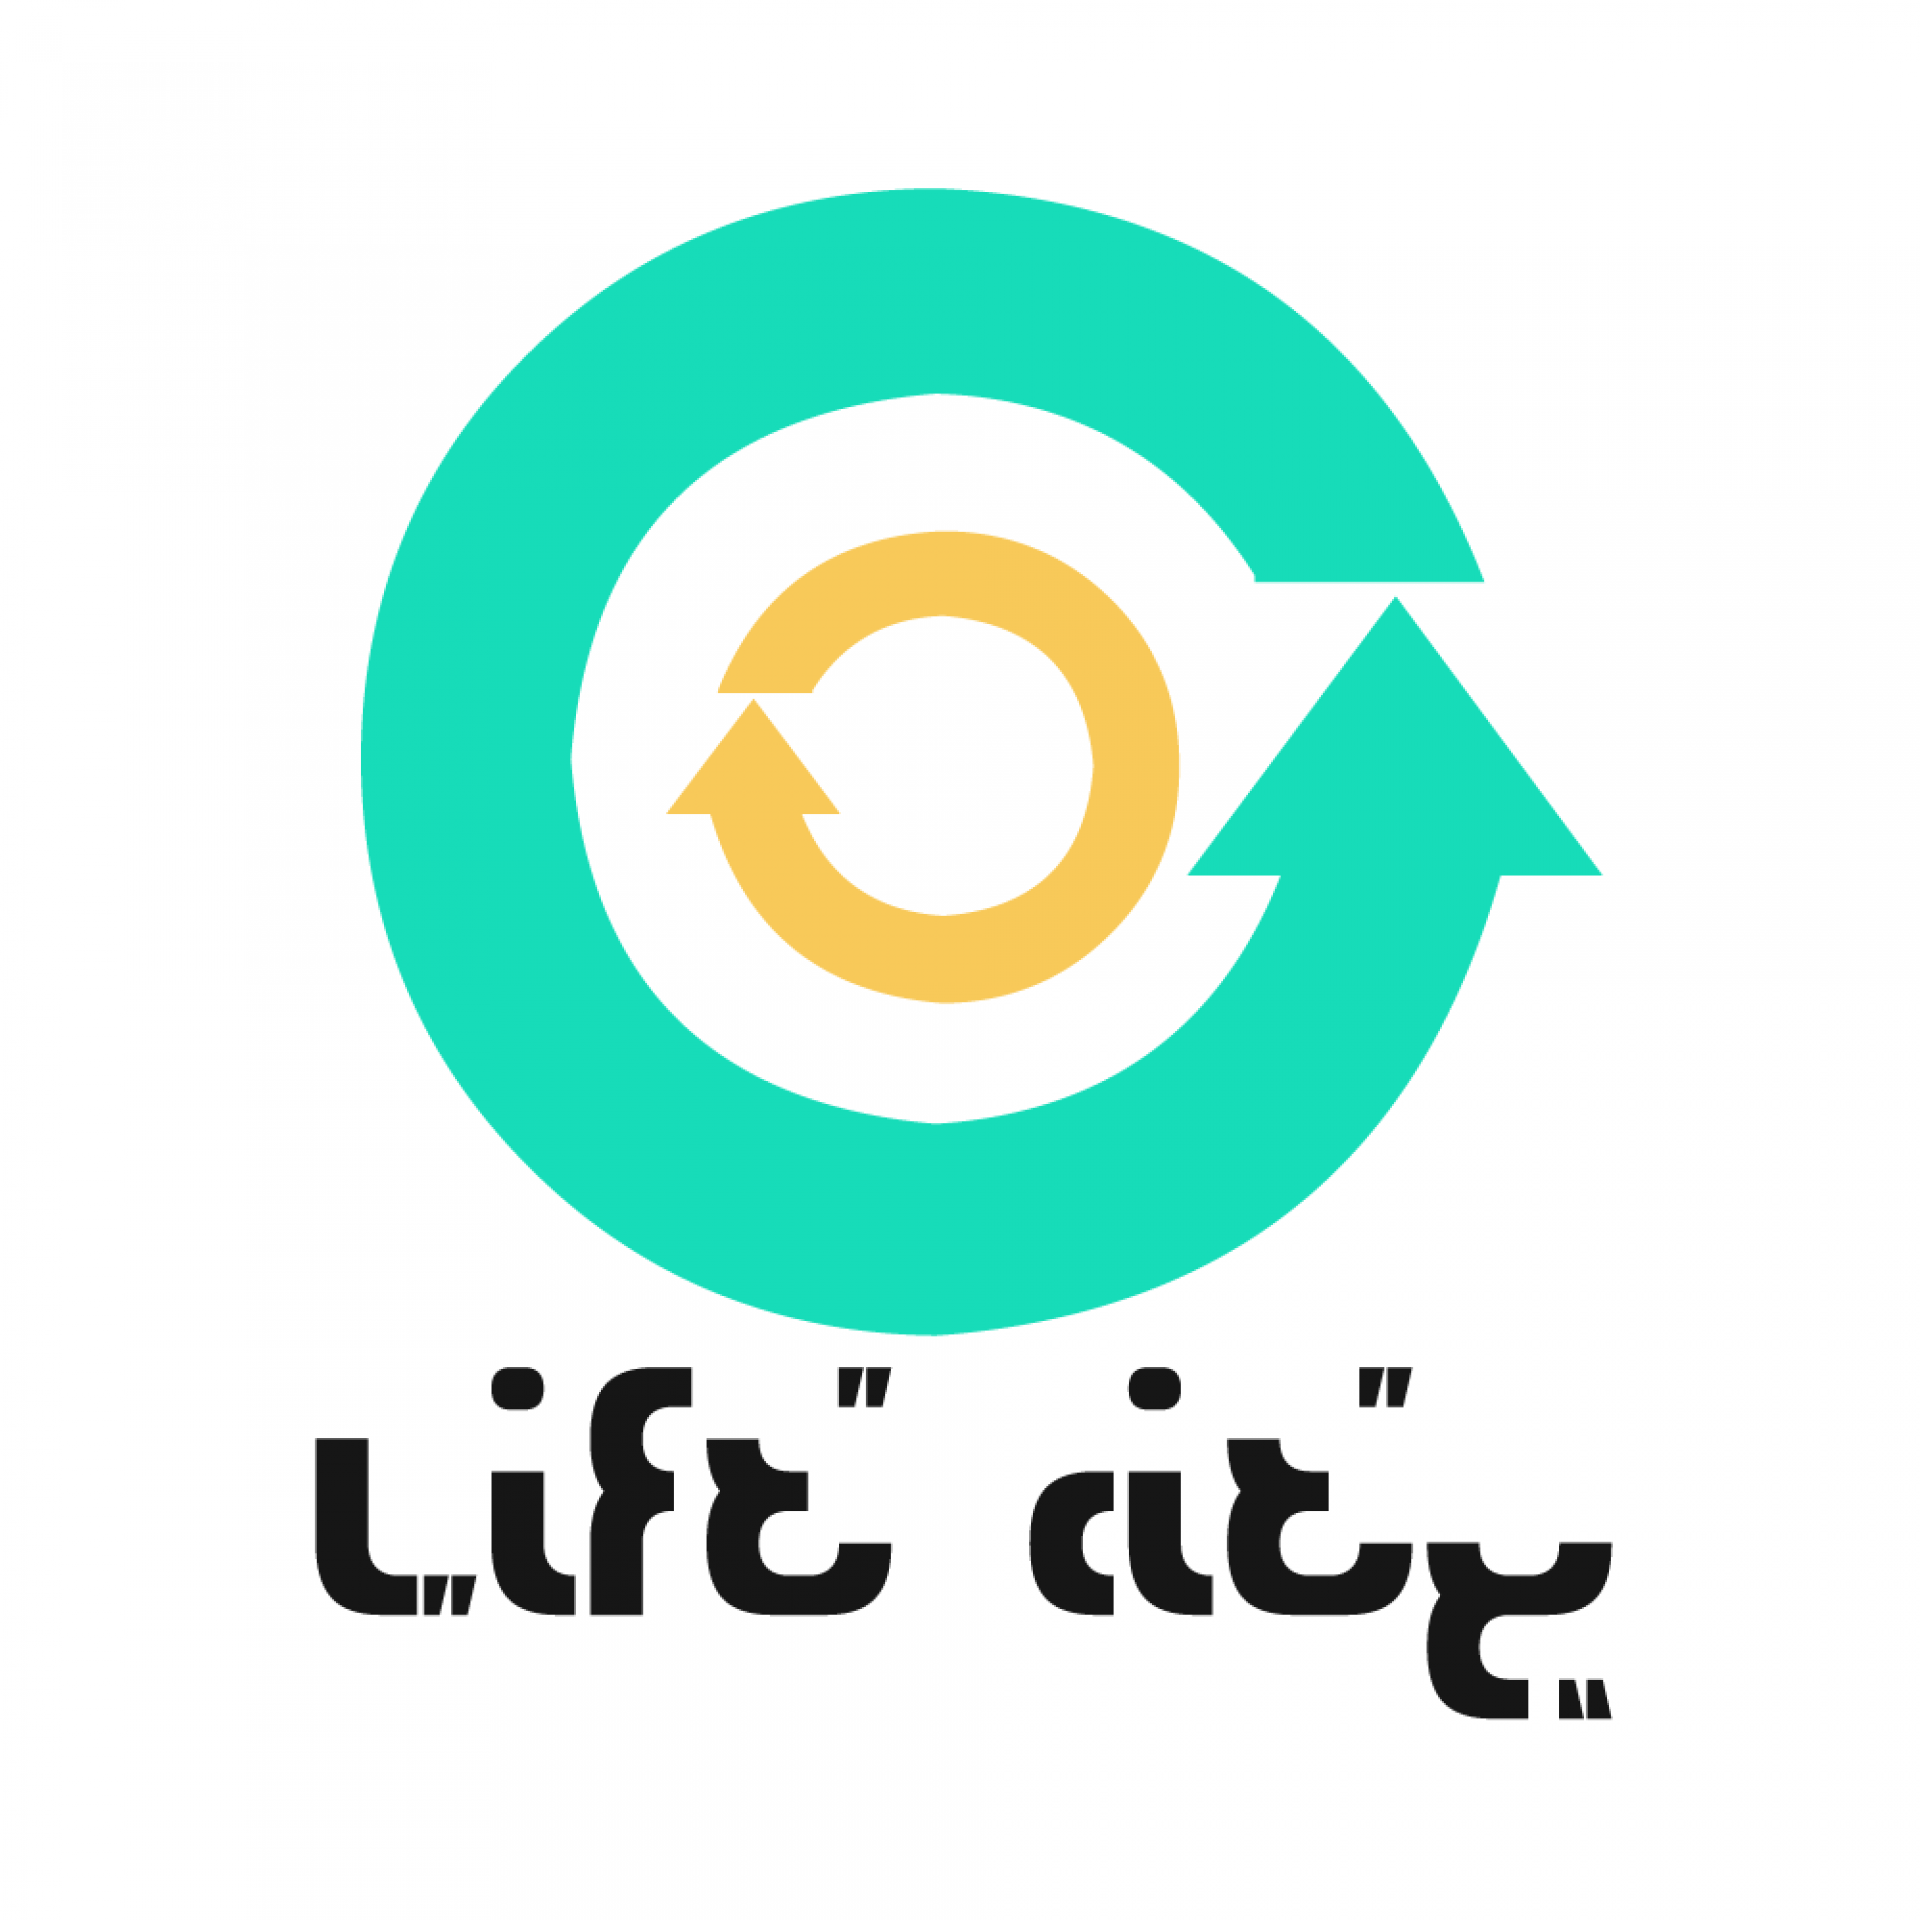 Lift City